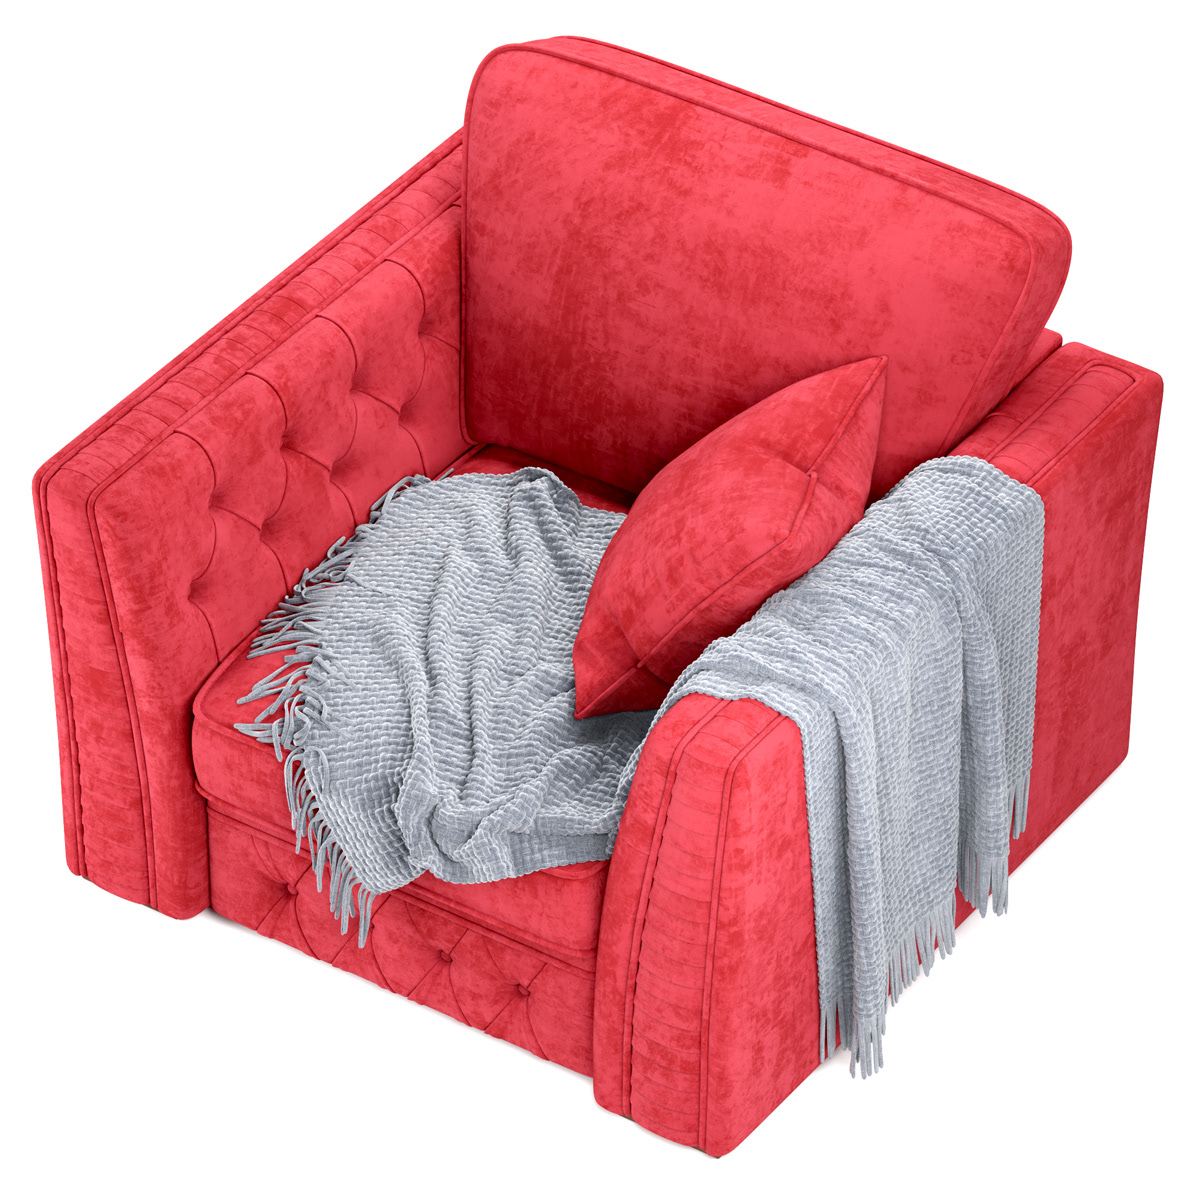 3D model armchair furniture plaid visualization